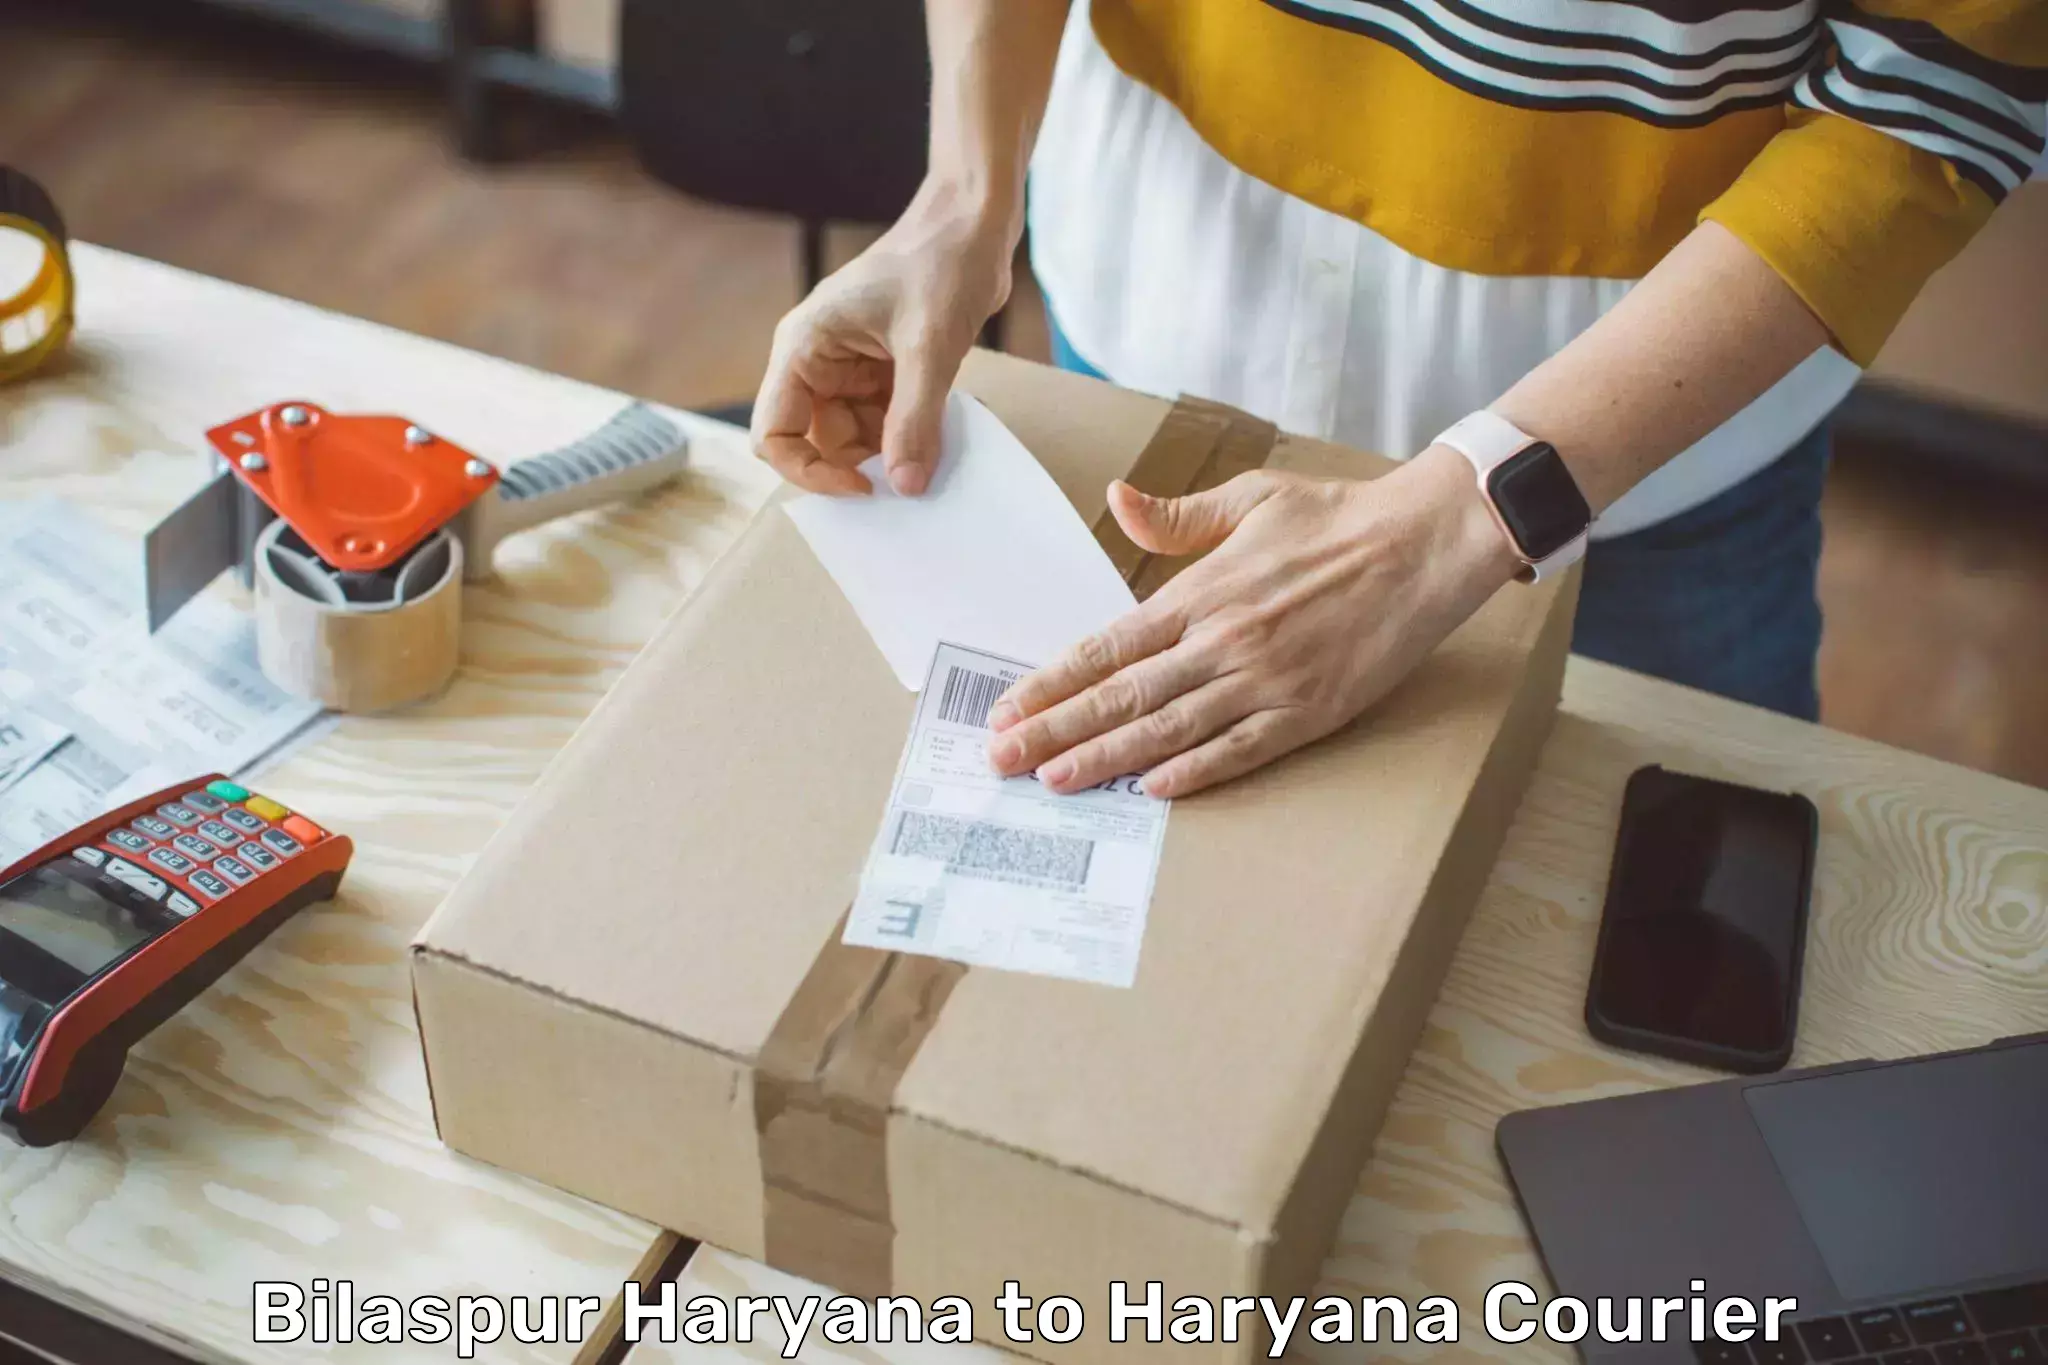 Enhanced delivery experience Bilaspur Haryana to Bilaspur Haryana